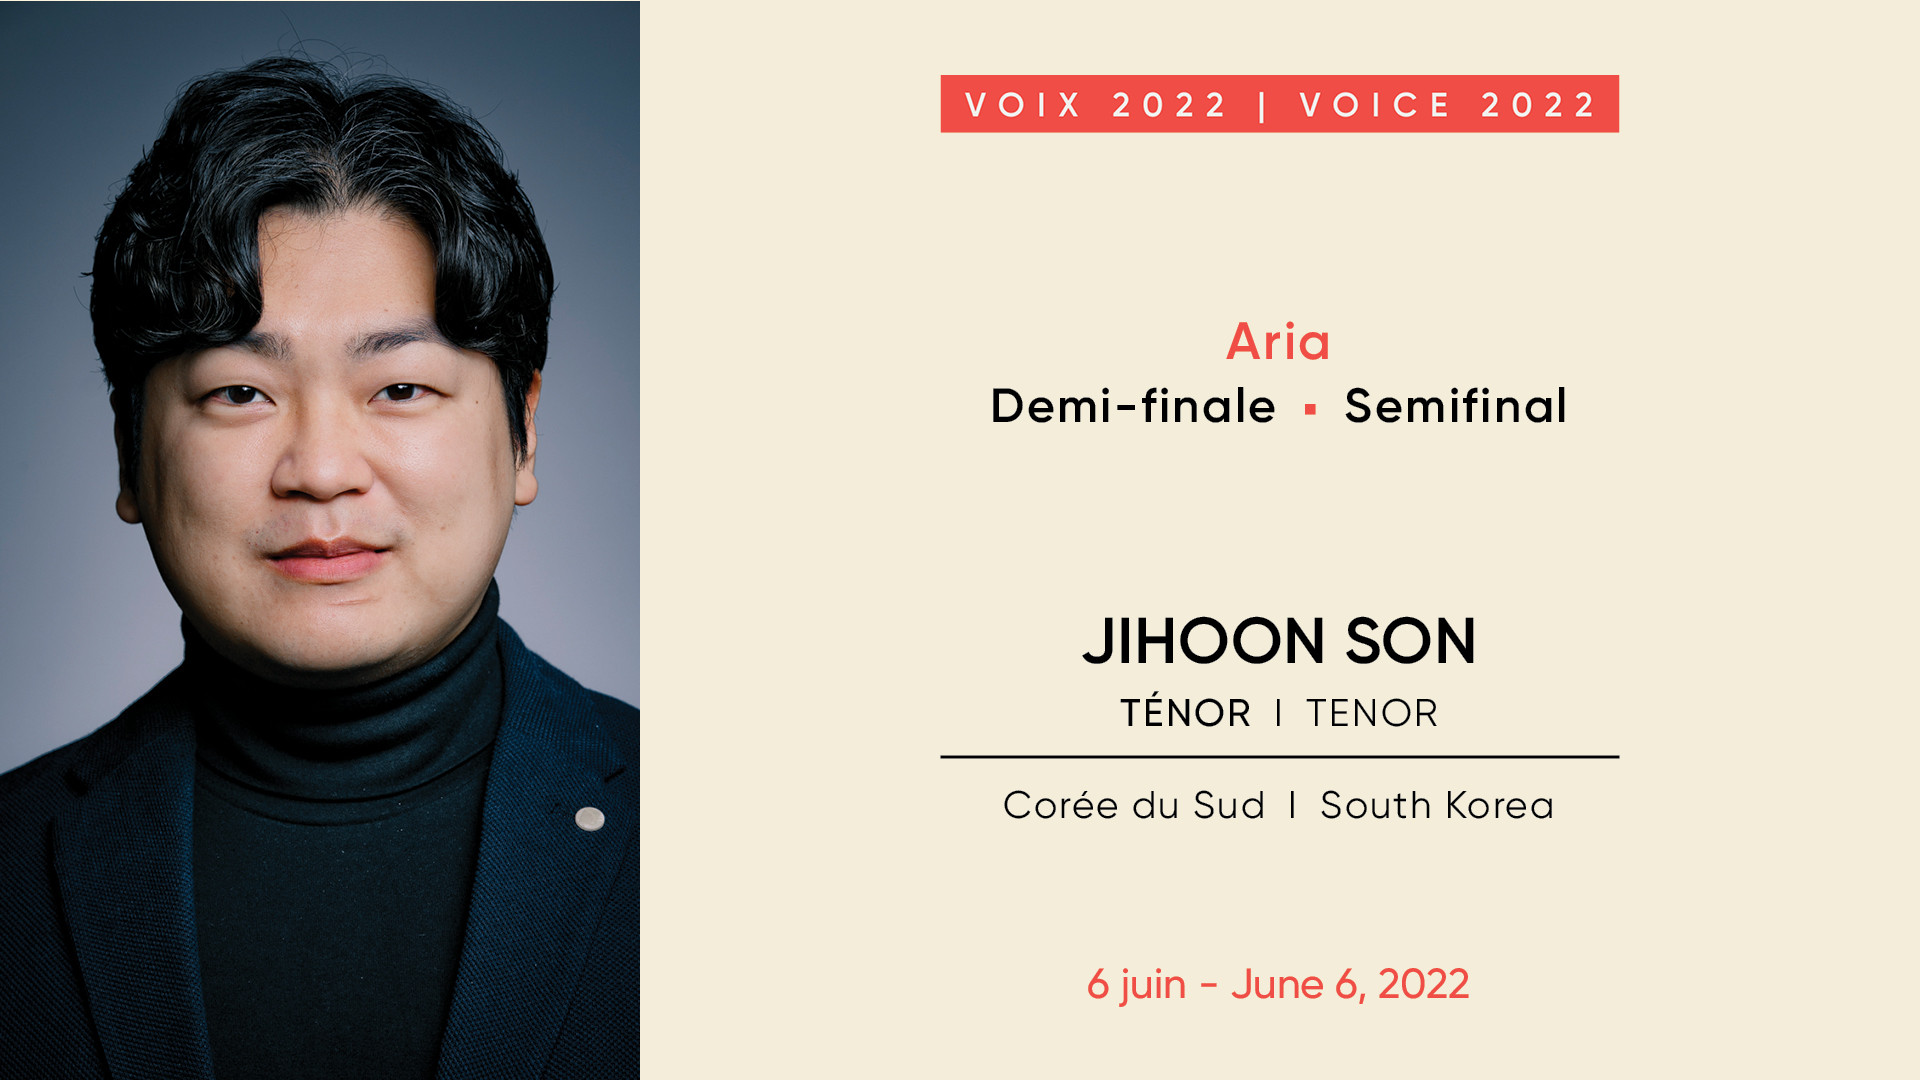 Jihoon Son, tenor